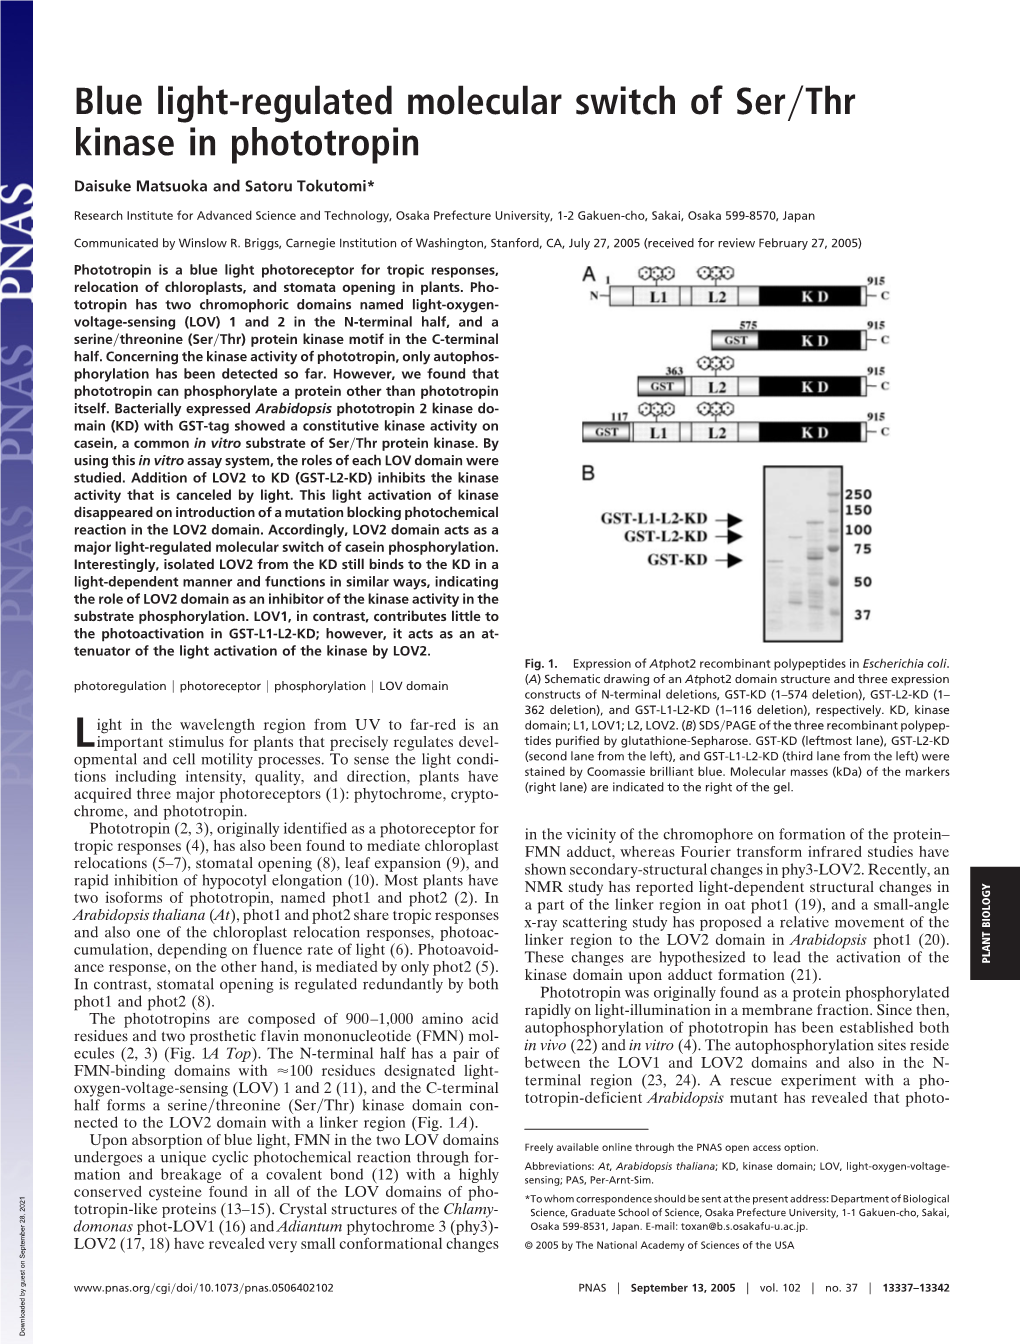 Blue Light-Regulated Molecular Switch of Ser Thr Kinase in Phototropin